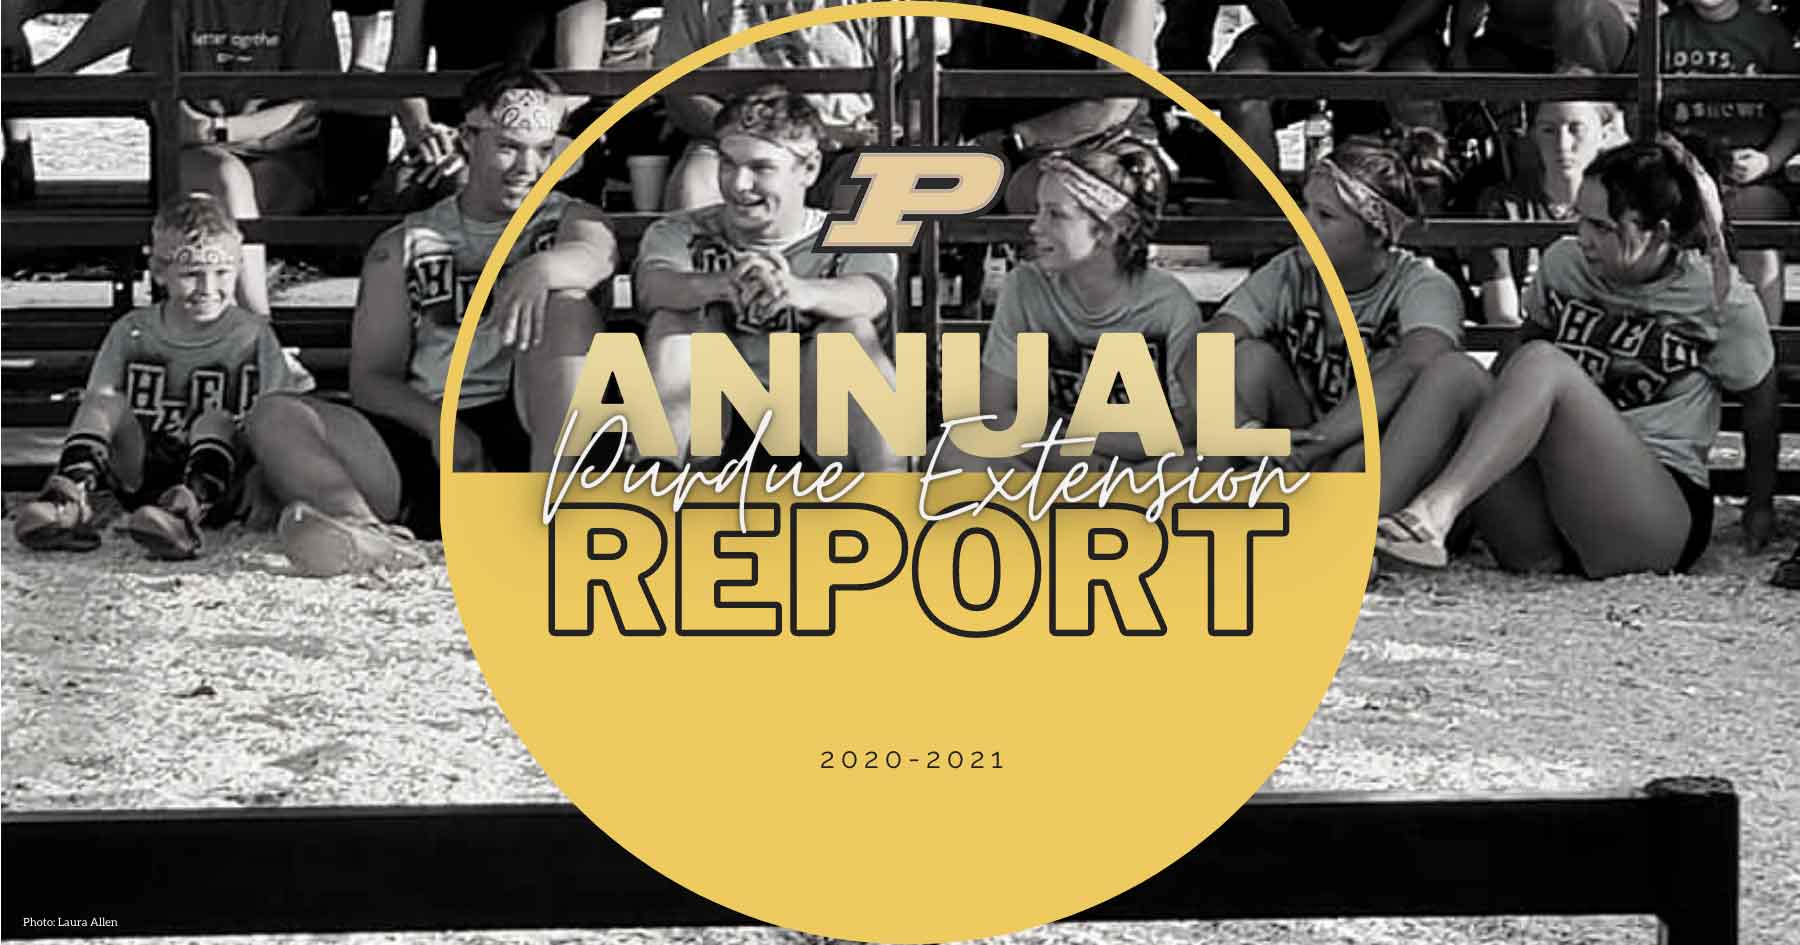 Steuben County Purdue Extension Annual Report 2020-2021